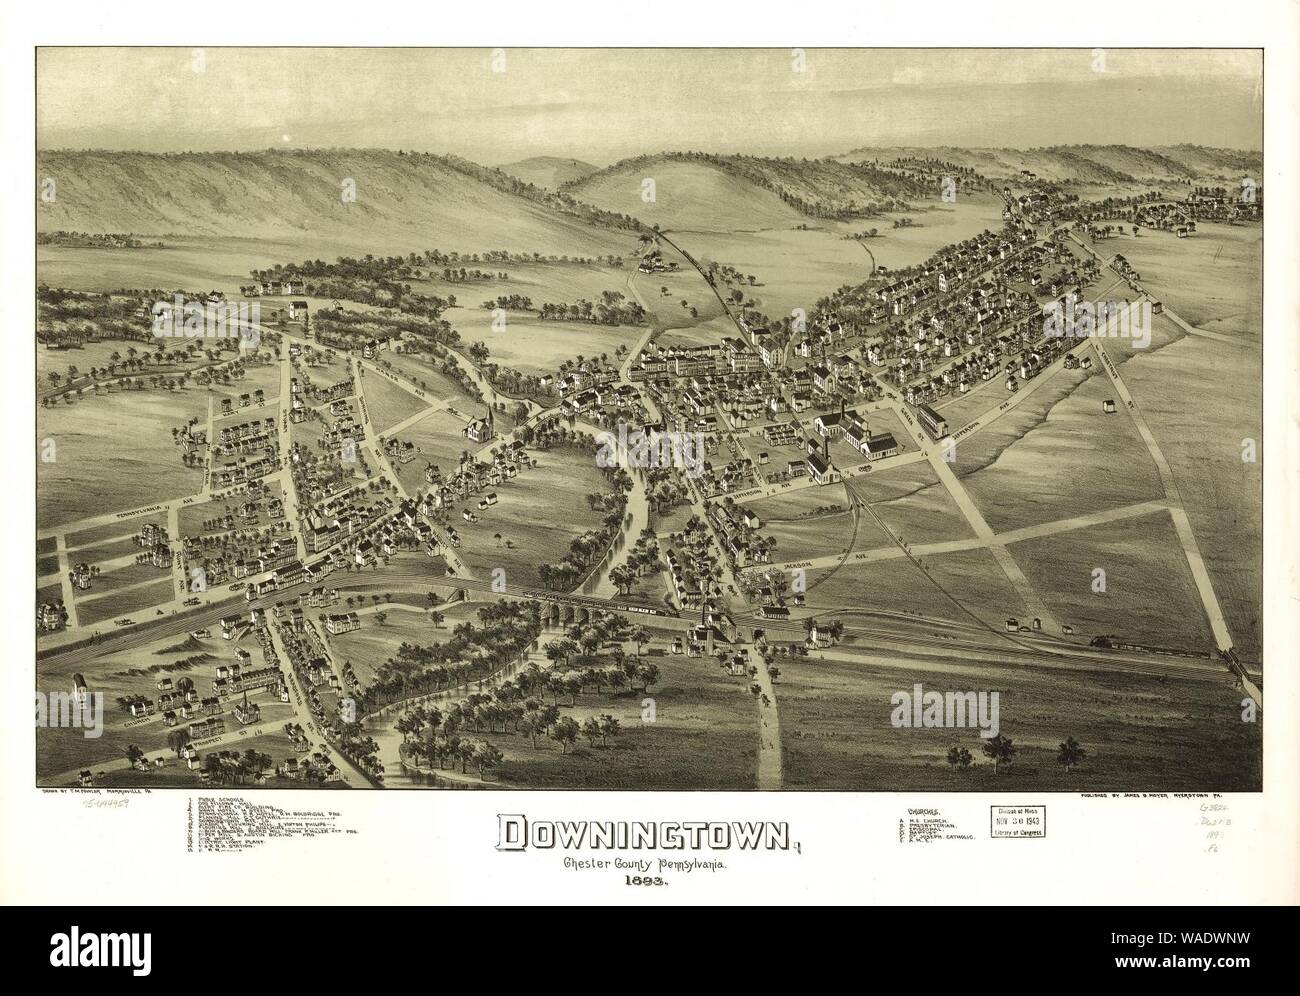 Downingtown, Chester County, Pennsylvania 1893. Stockfoto